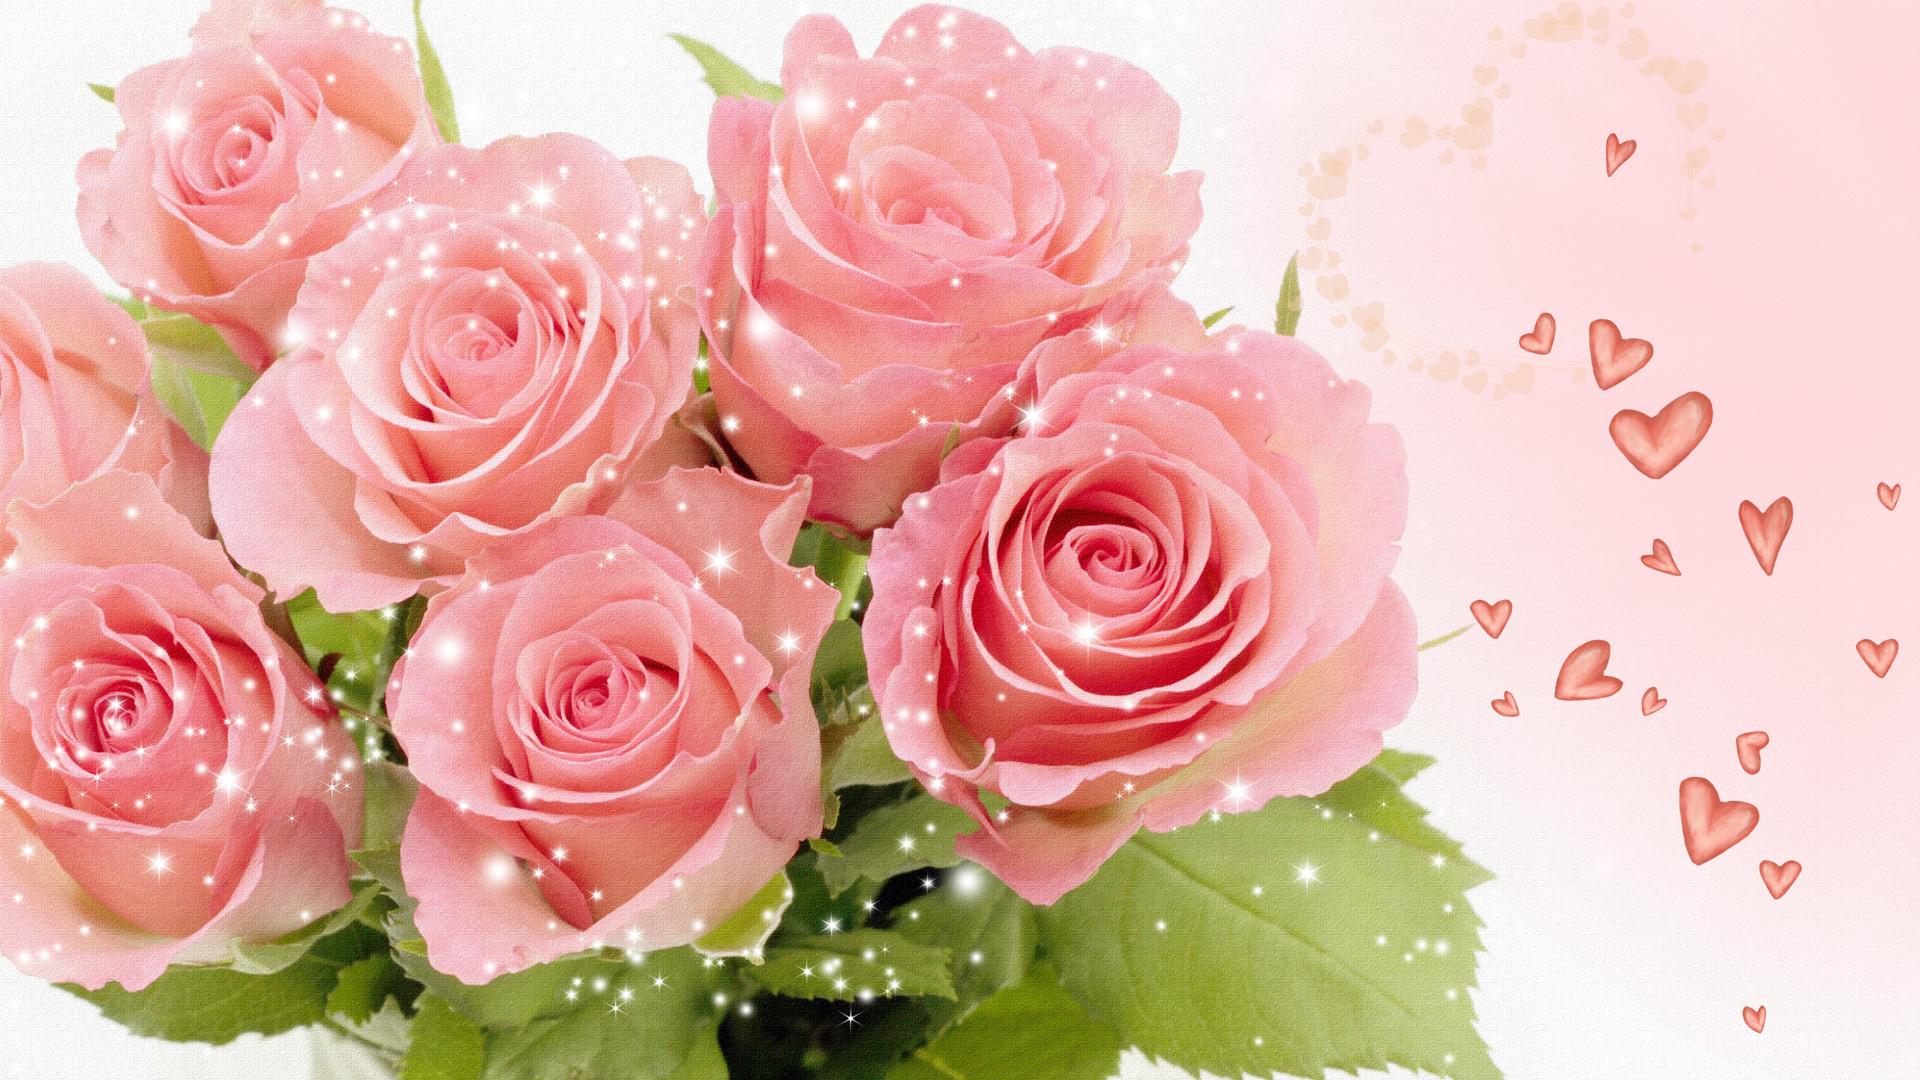 Pink Rose Pictures download free | PixelsTalk.Net